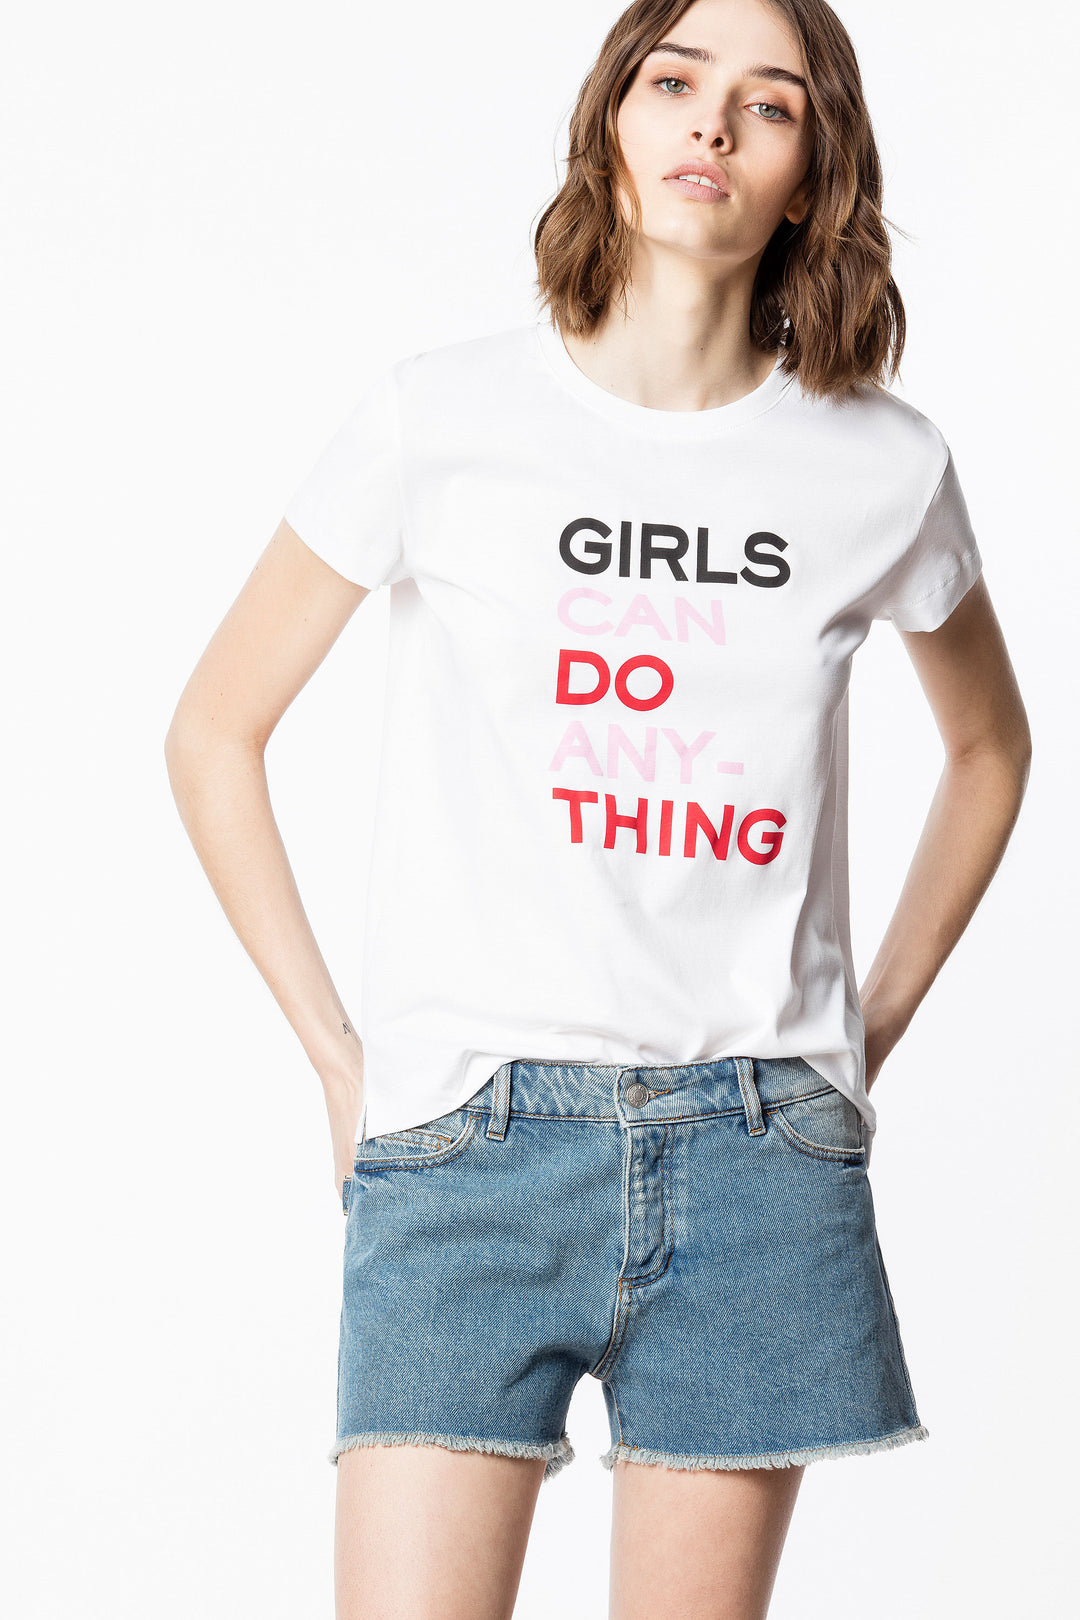 Zadig & Voltaire - Walk Girls "Girls Can Do Anything" Shirt Blanc